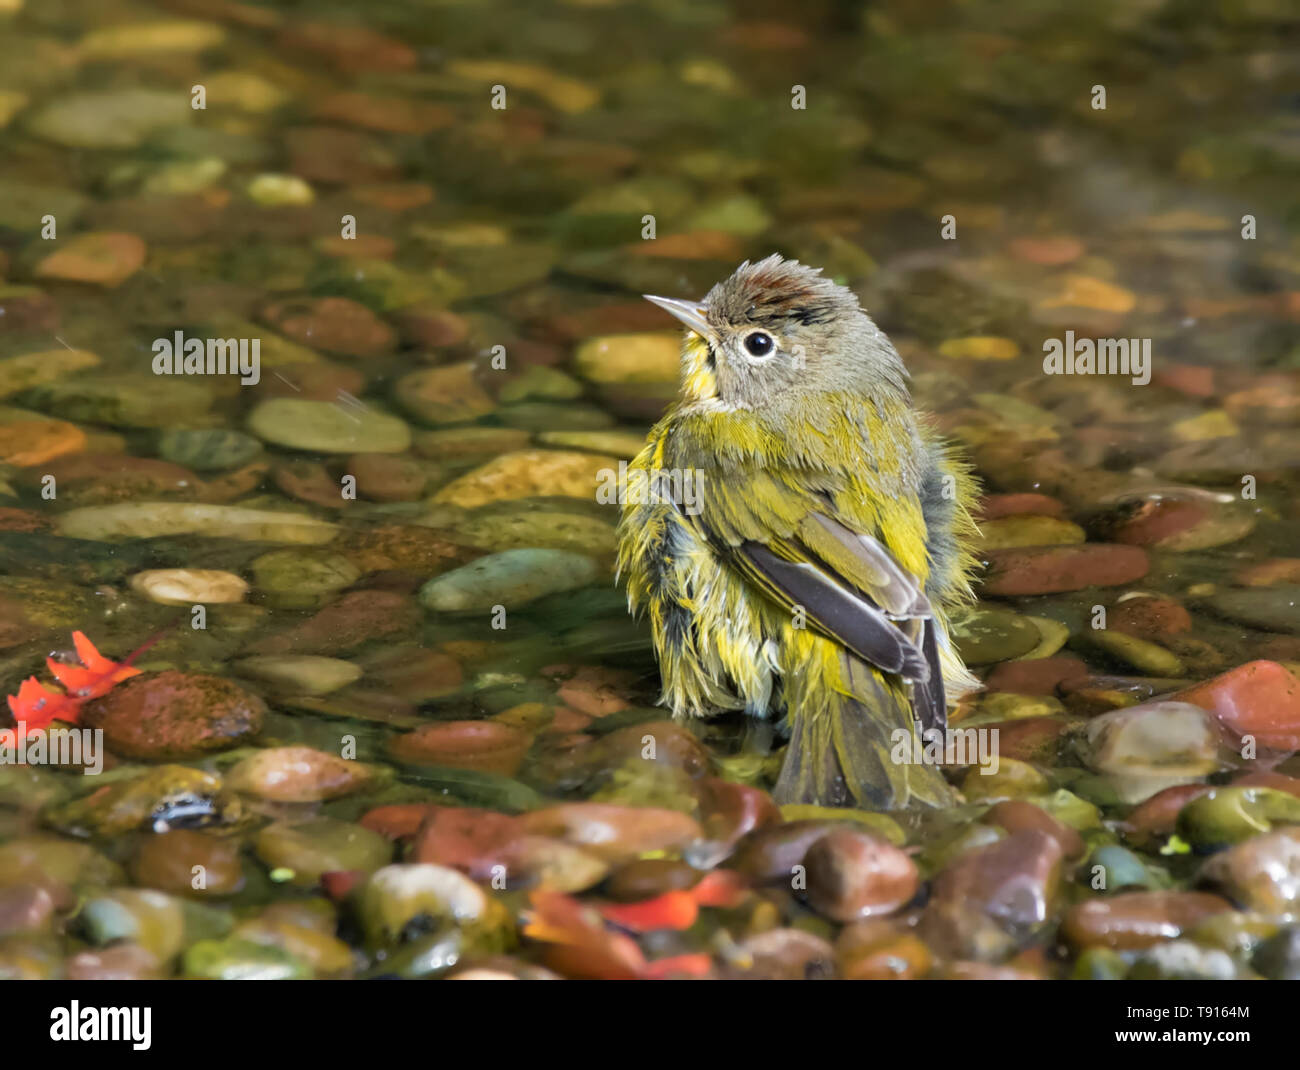 ashville Warbler, Leiothlypis ruficapilla, bathes in a backyard pond, in Saskatoon, Saskatchewan Stock Photo